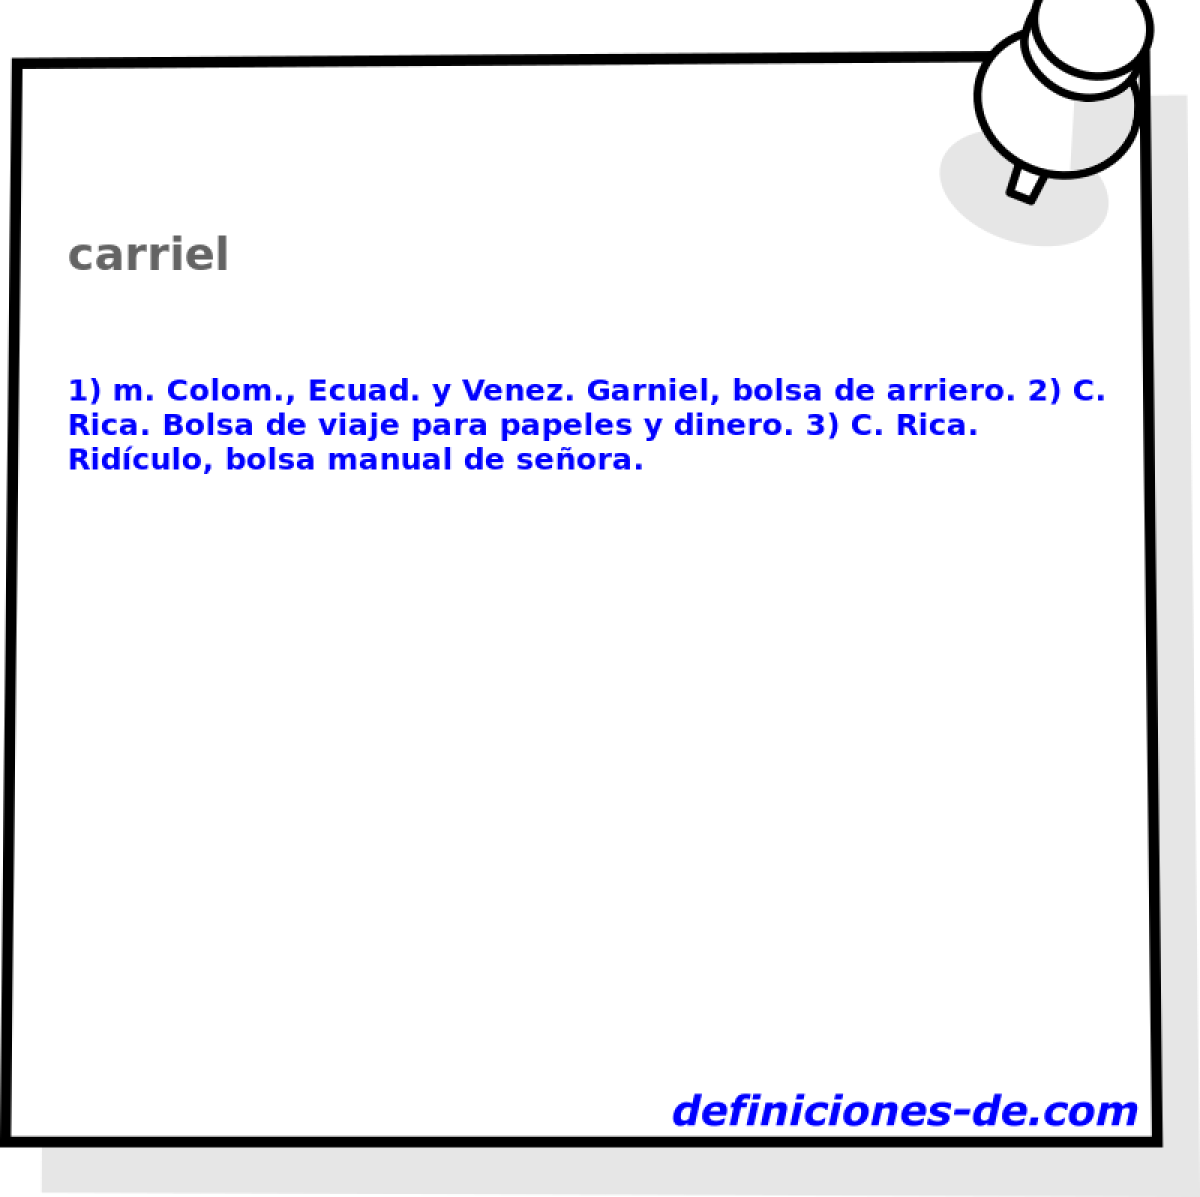 carriel 